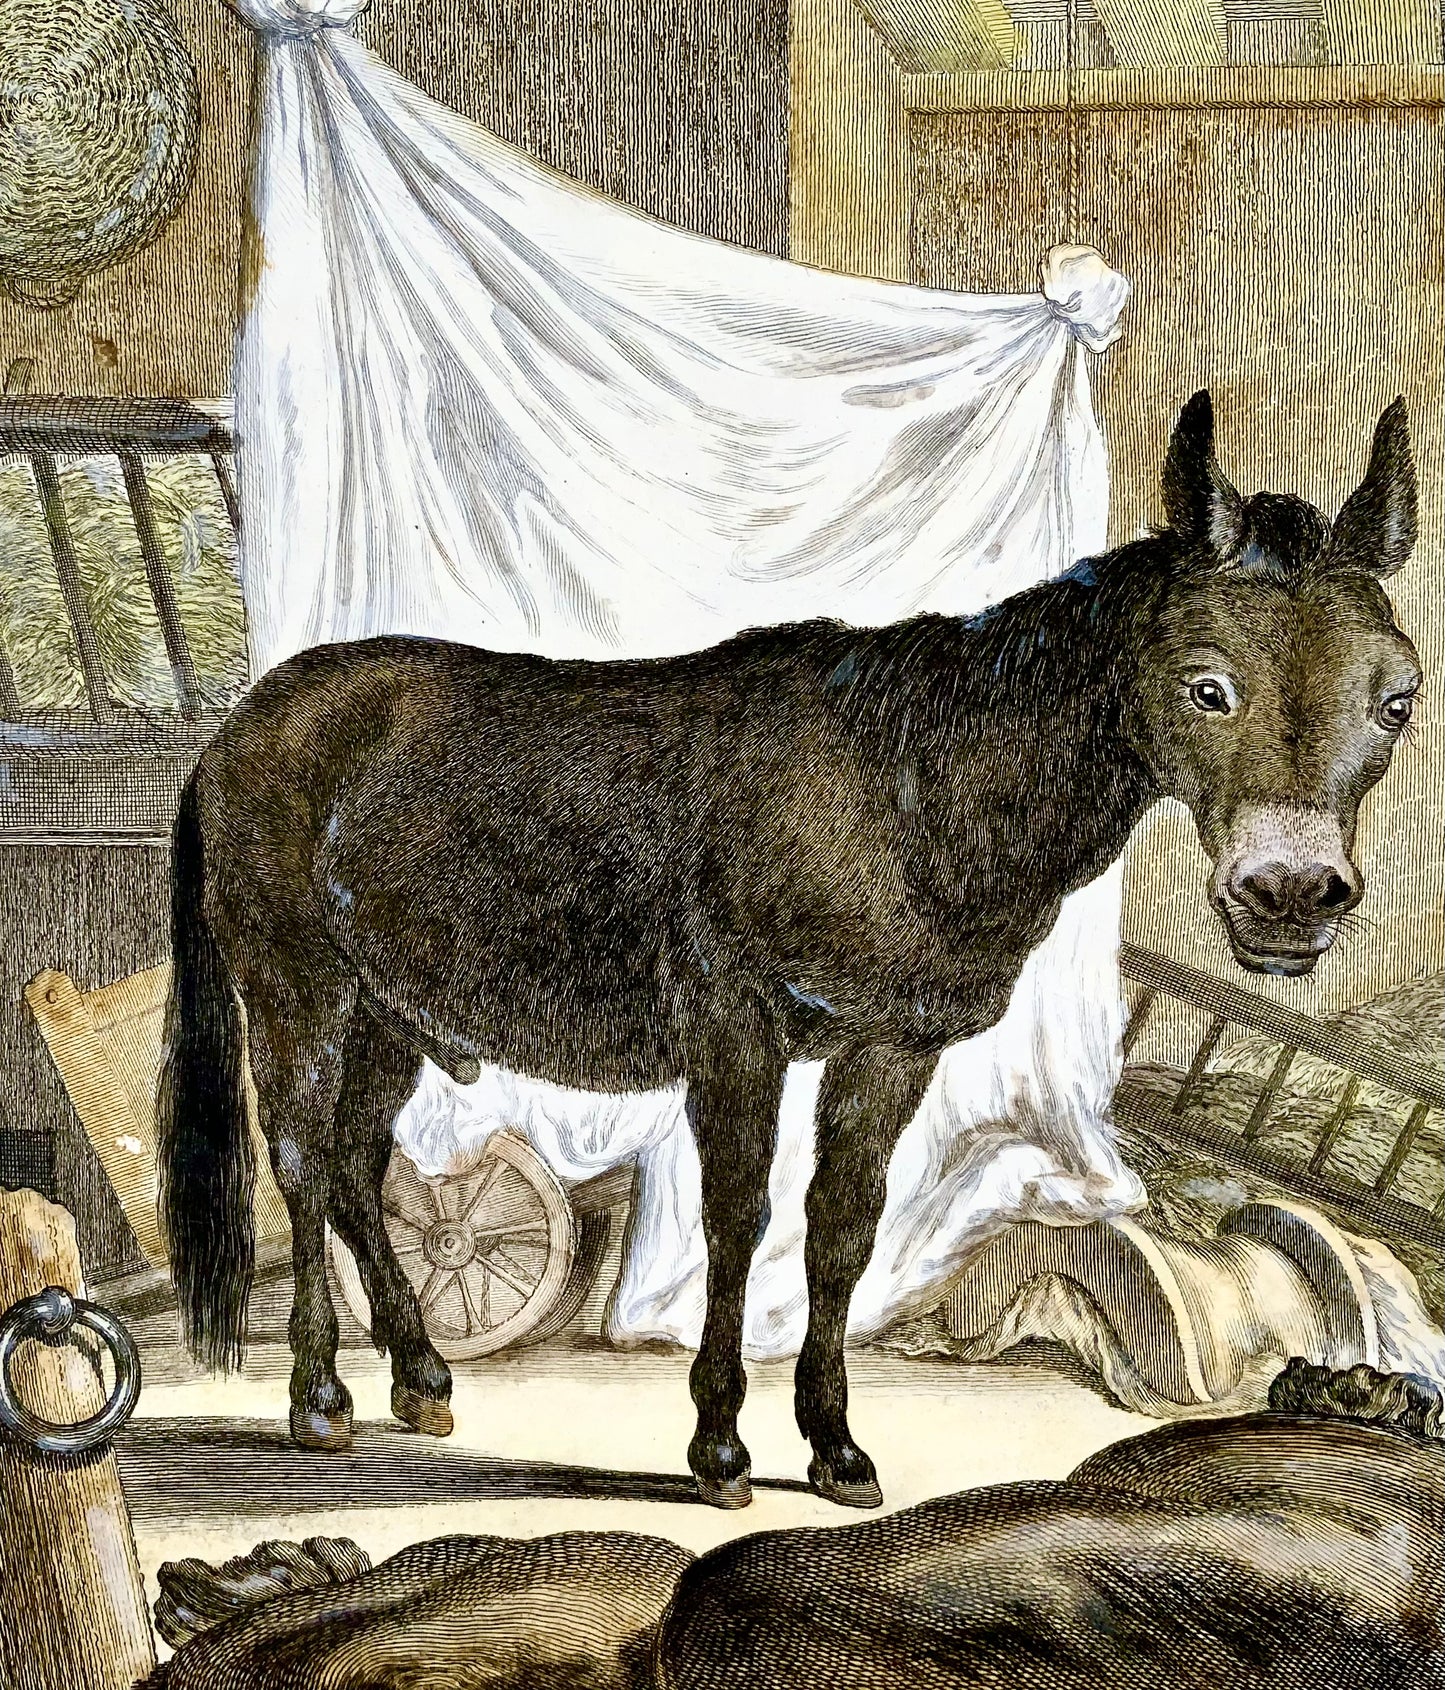 1766 De Seve; Bardeau Donkey large QUARTO edition hand colored engraving - Mammal